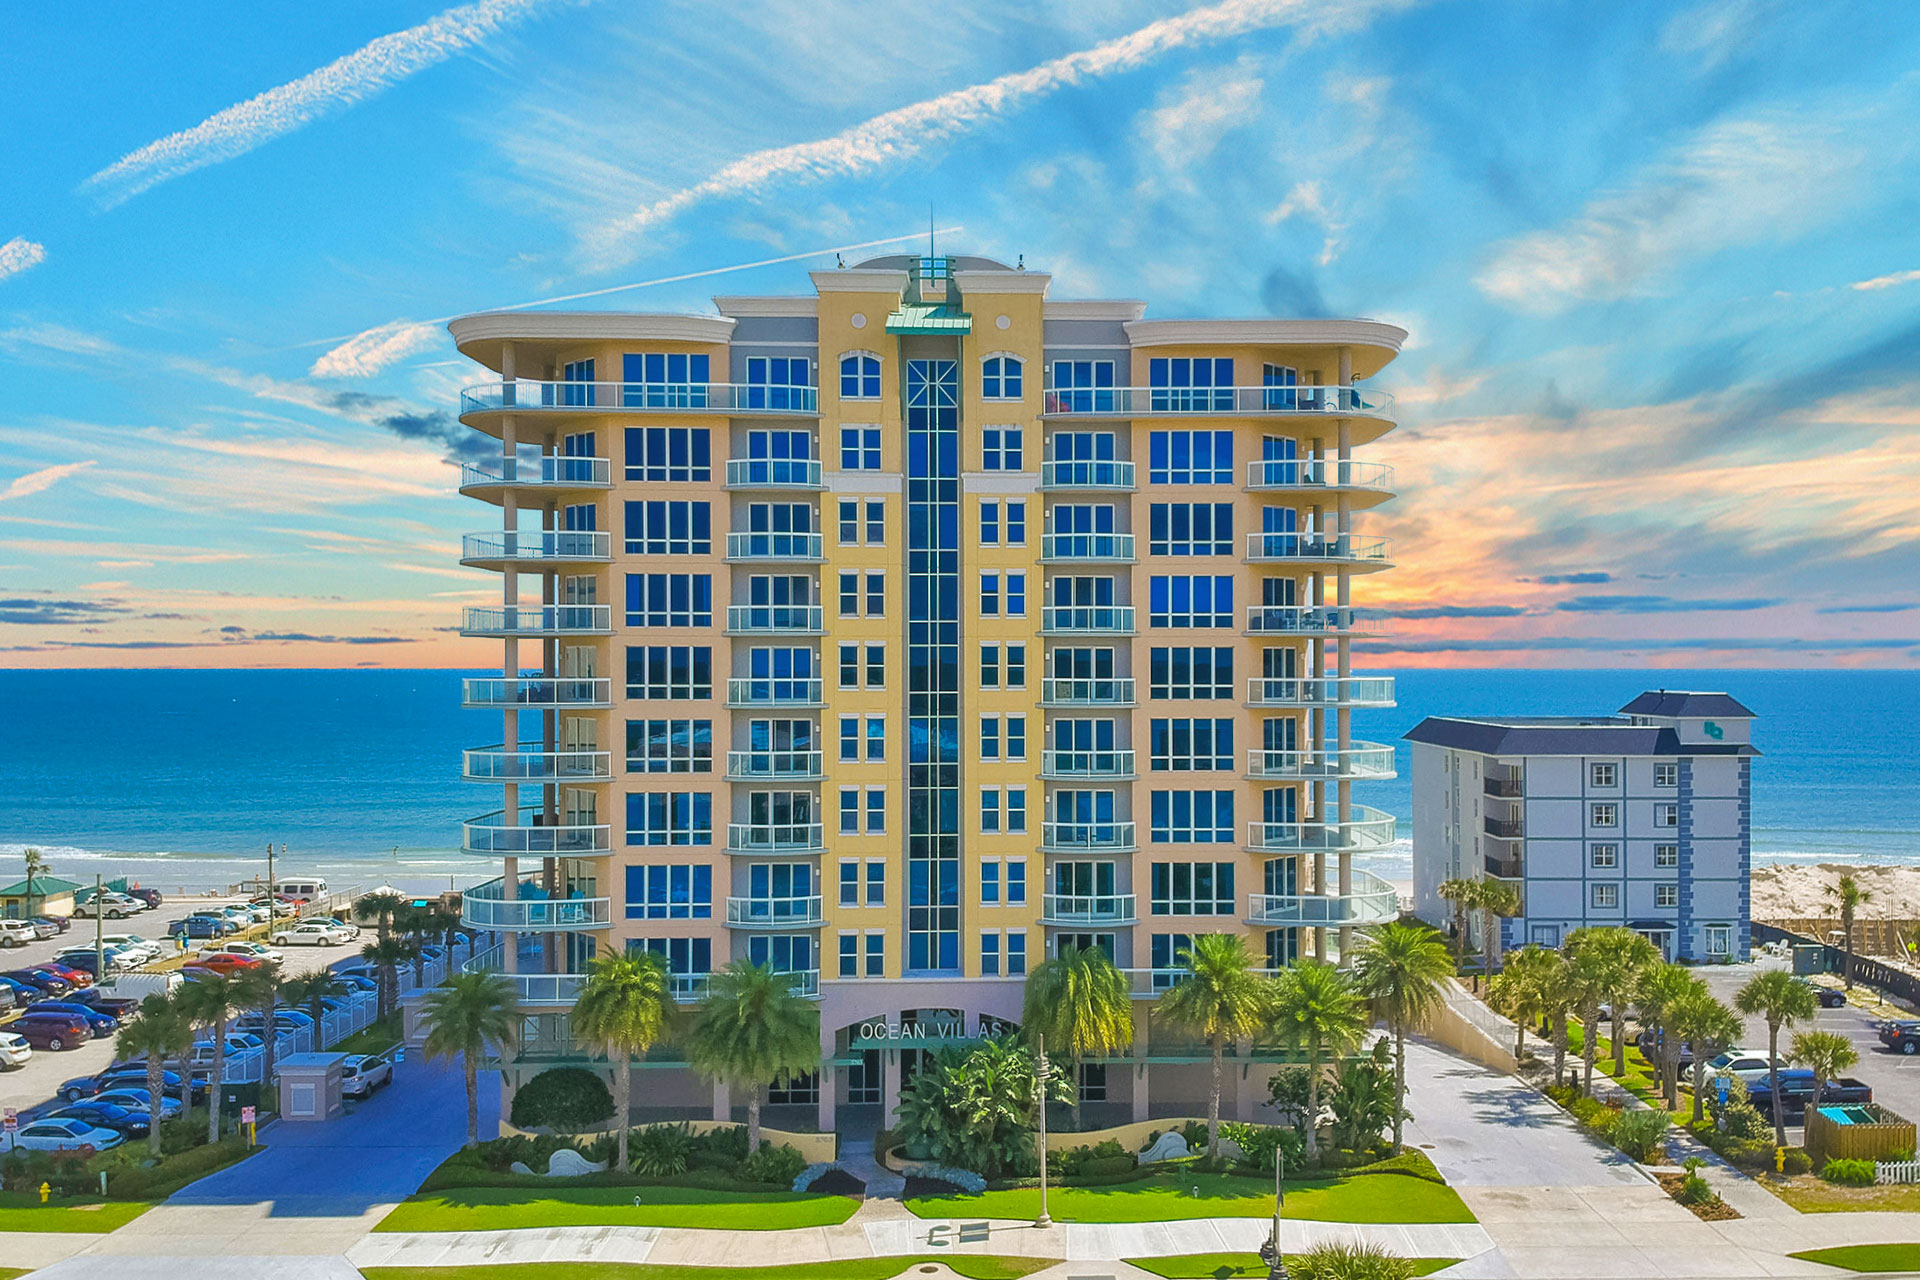 Ocean Villas Condos For Sale. 3703 S Atlantic Ave, Daytona Beach Shores, FL. Luxury Oceanfront Condominium. The LUXE Group at Oceans Luxury Realty 386-299-4043